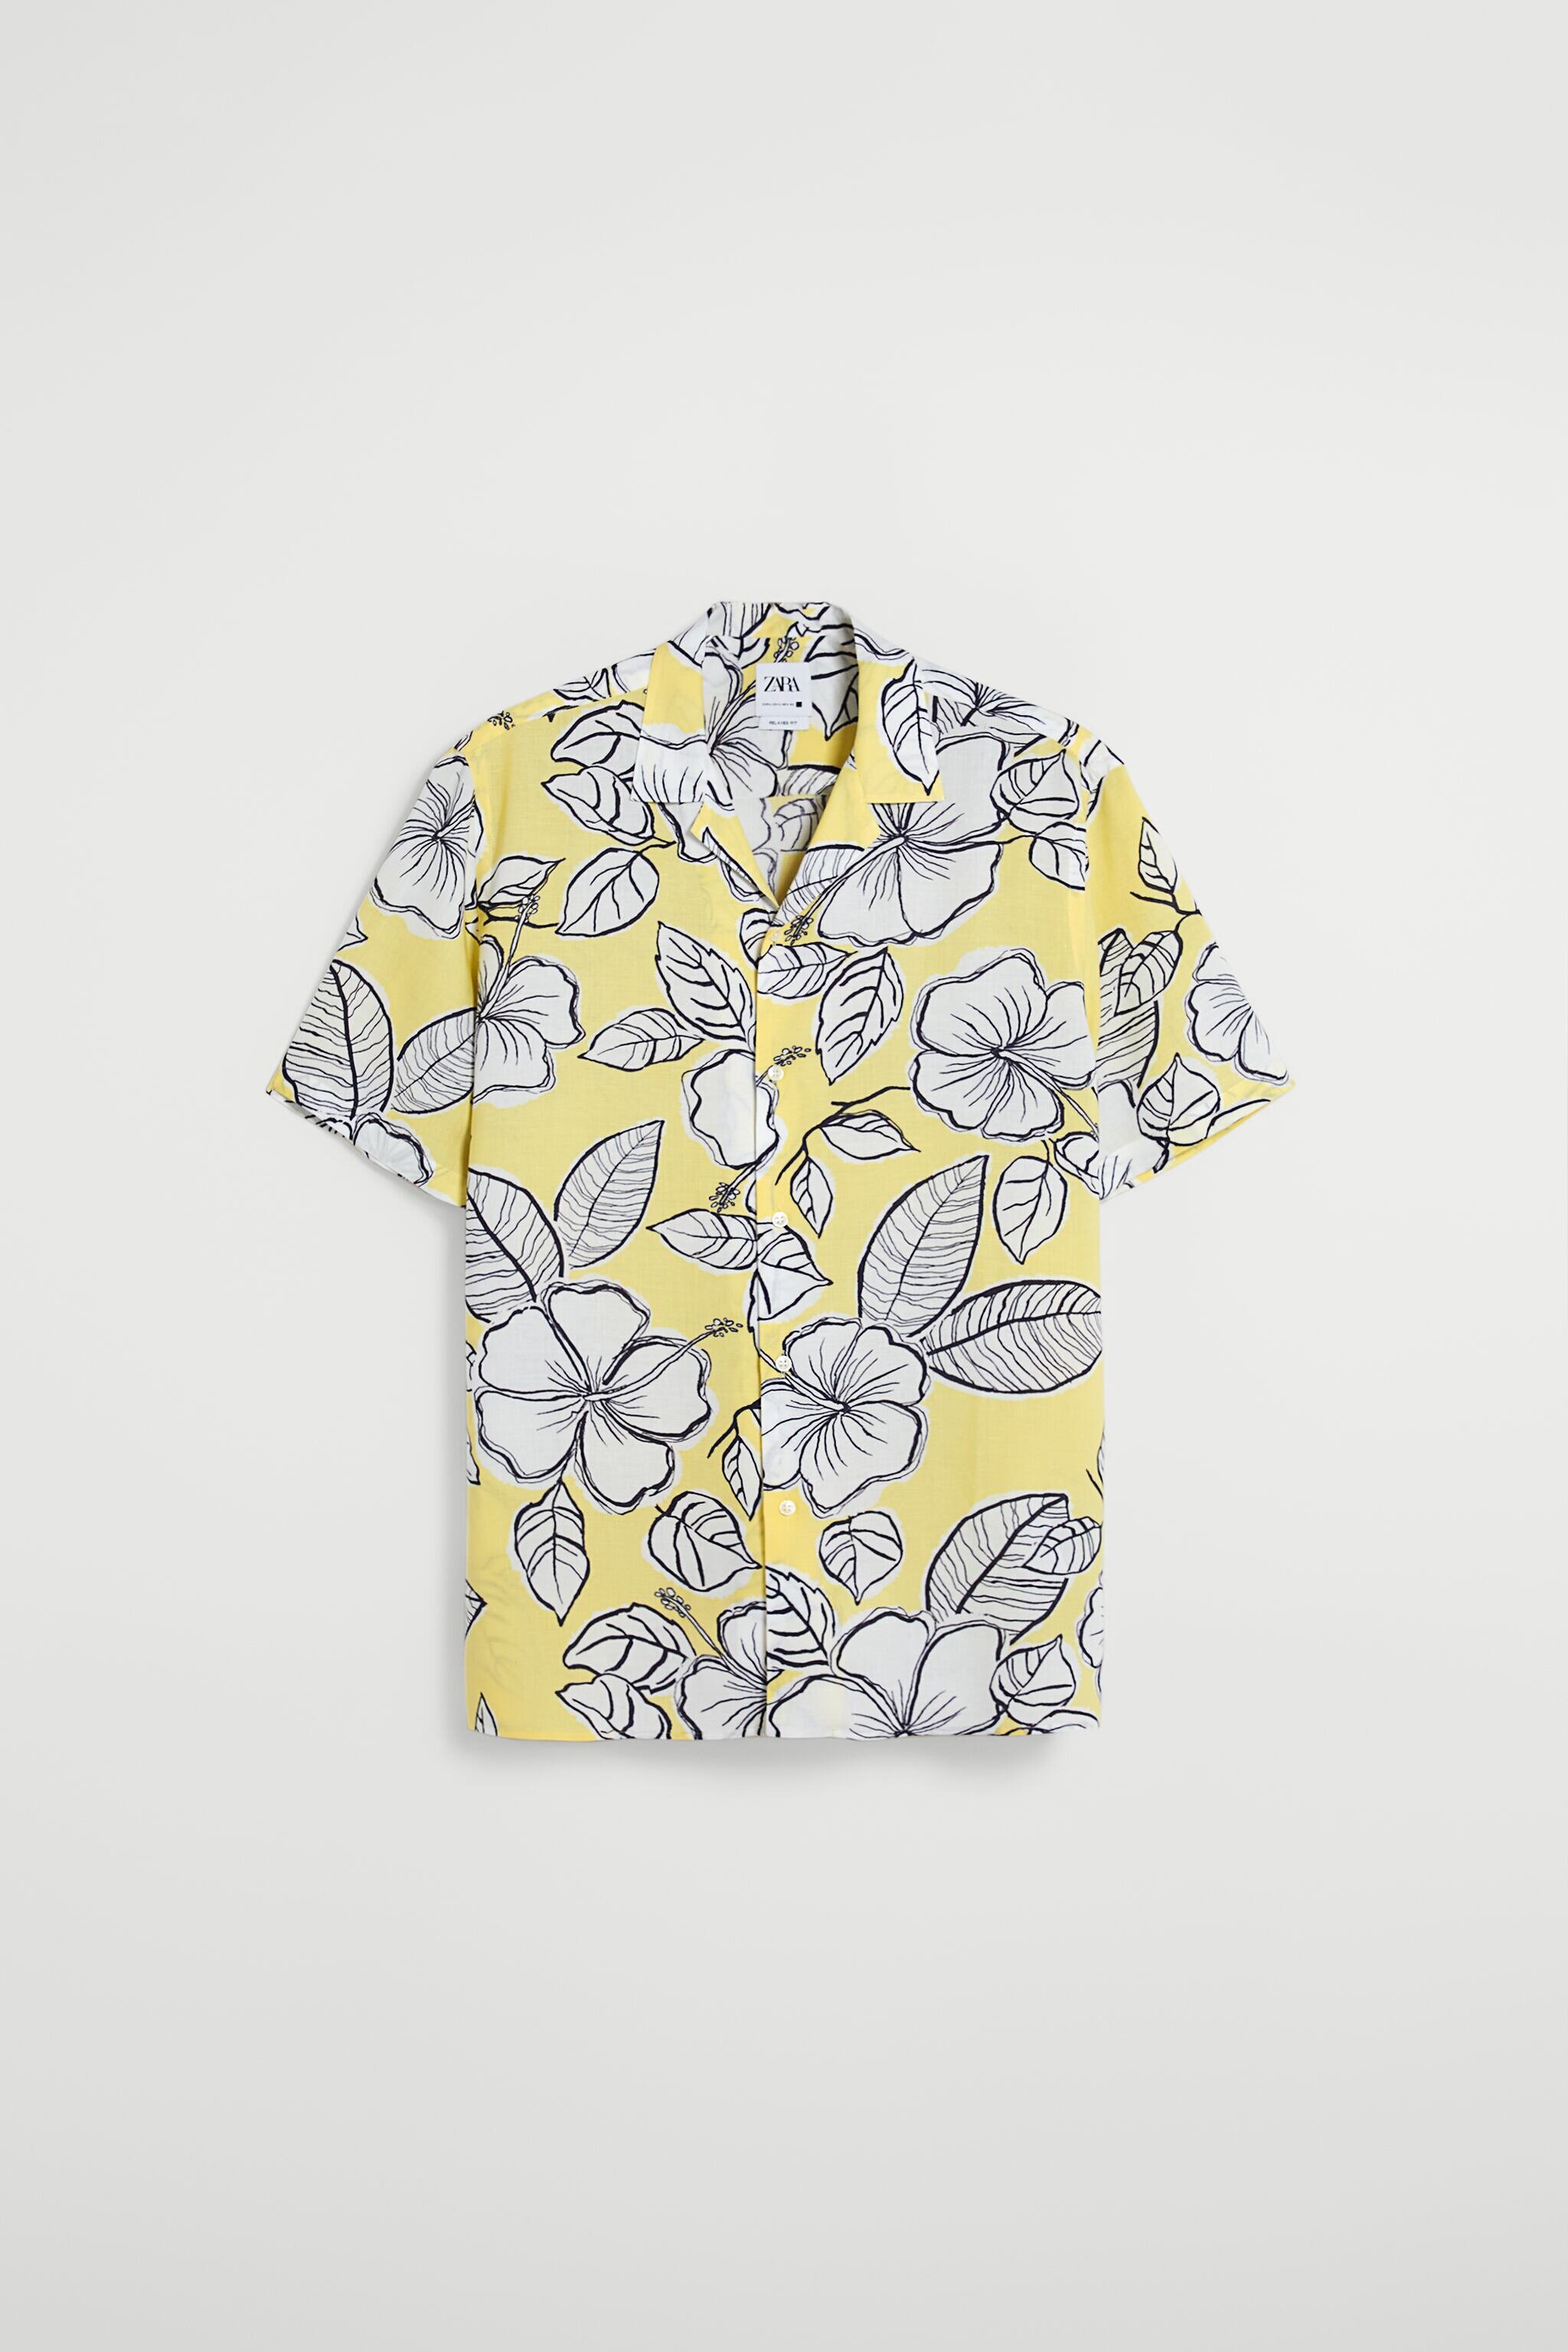 Floral Print Shirt, ₱1,595